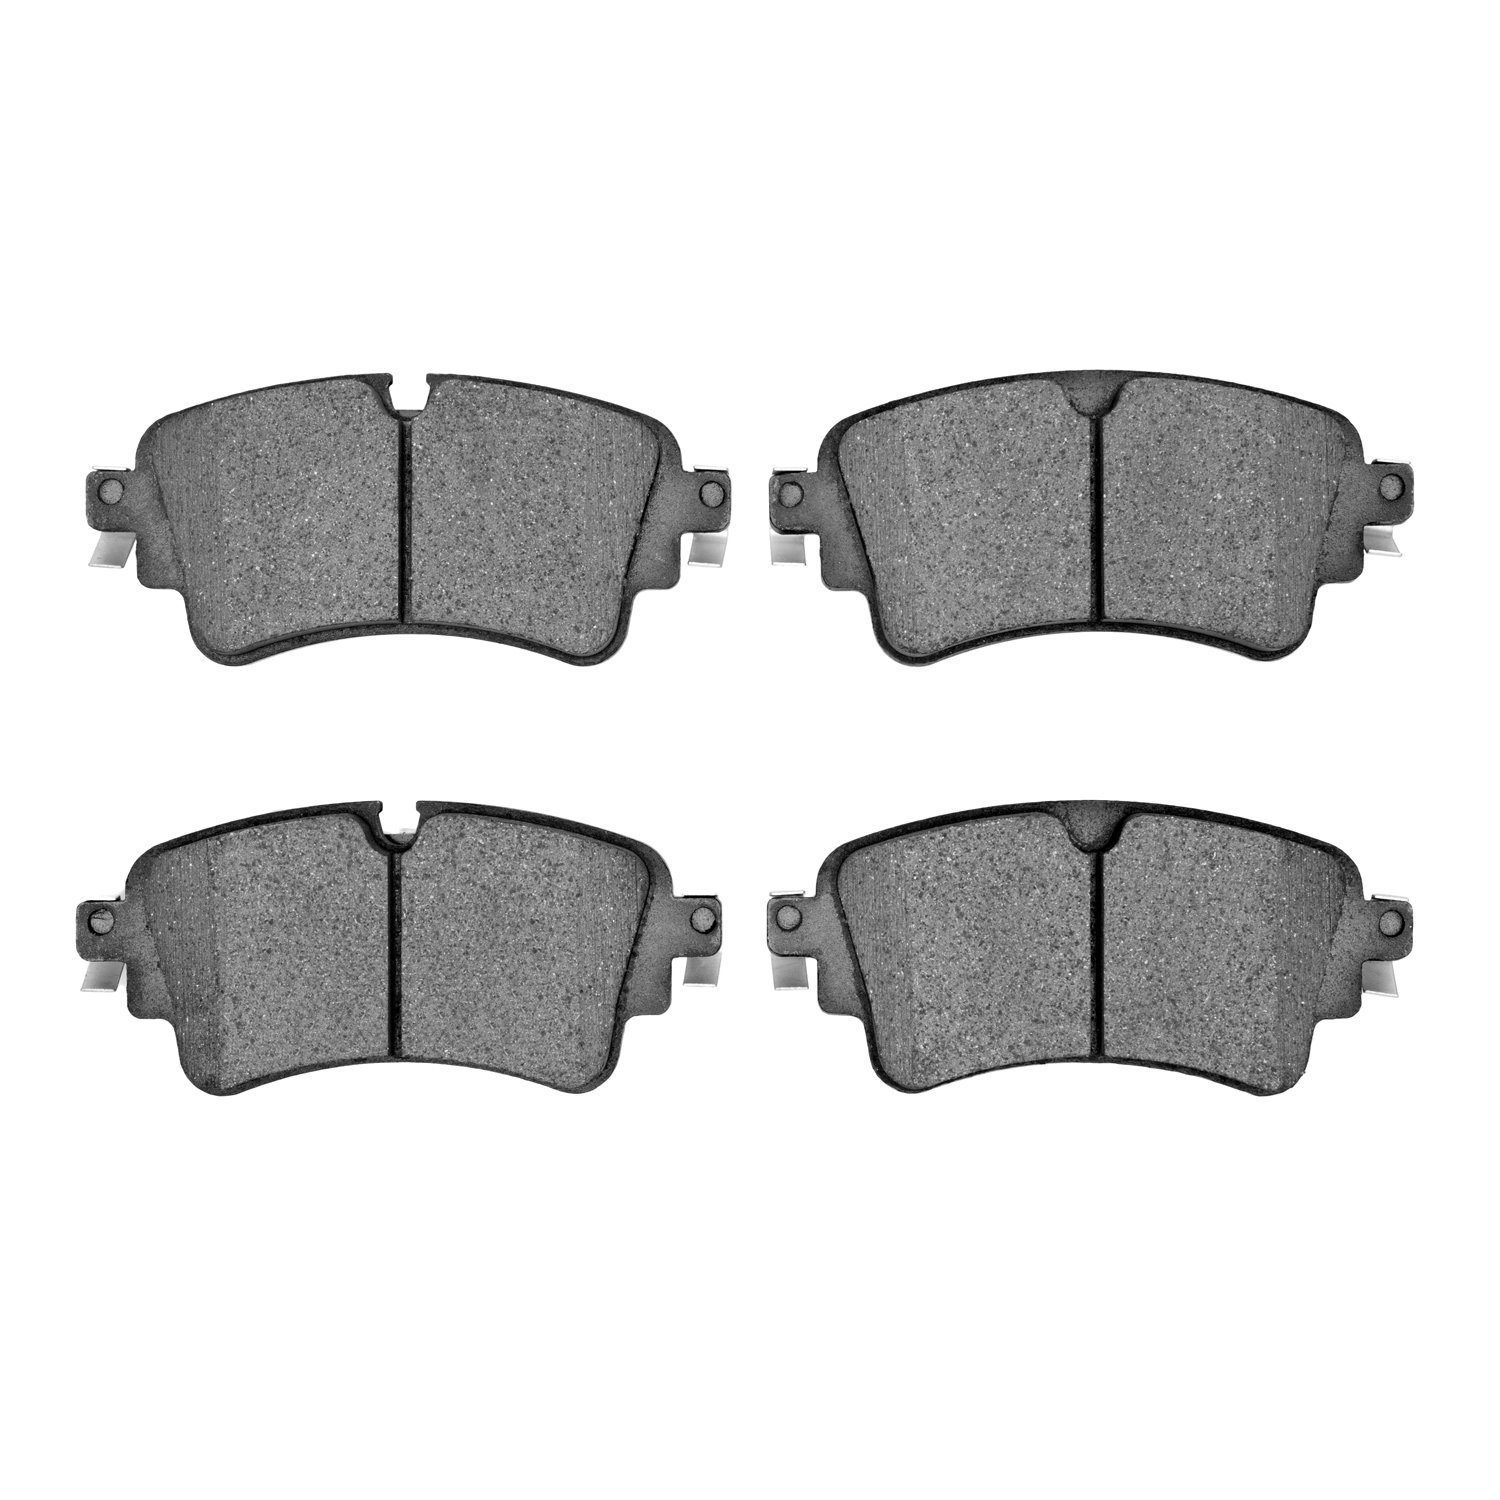 1600-1898-00 5000 Euro Ceramic Brake Pads, 2016-2021 Audi/Volkswagen, Position: Rear